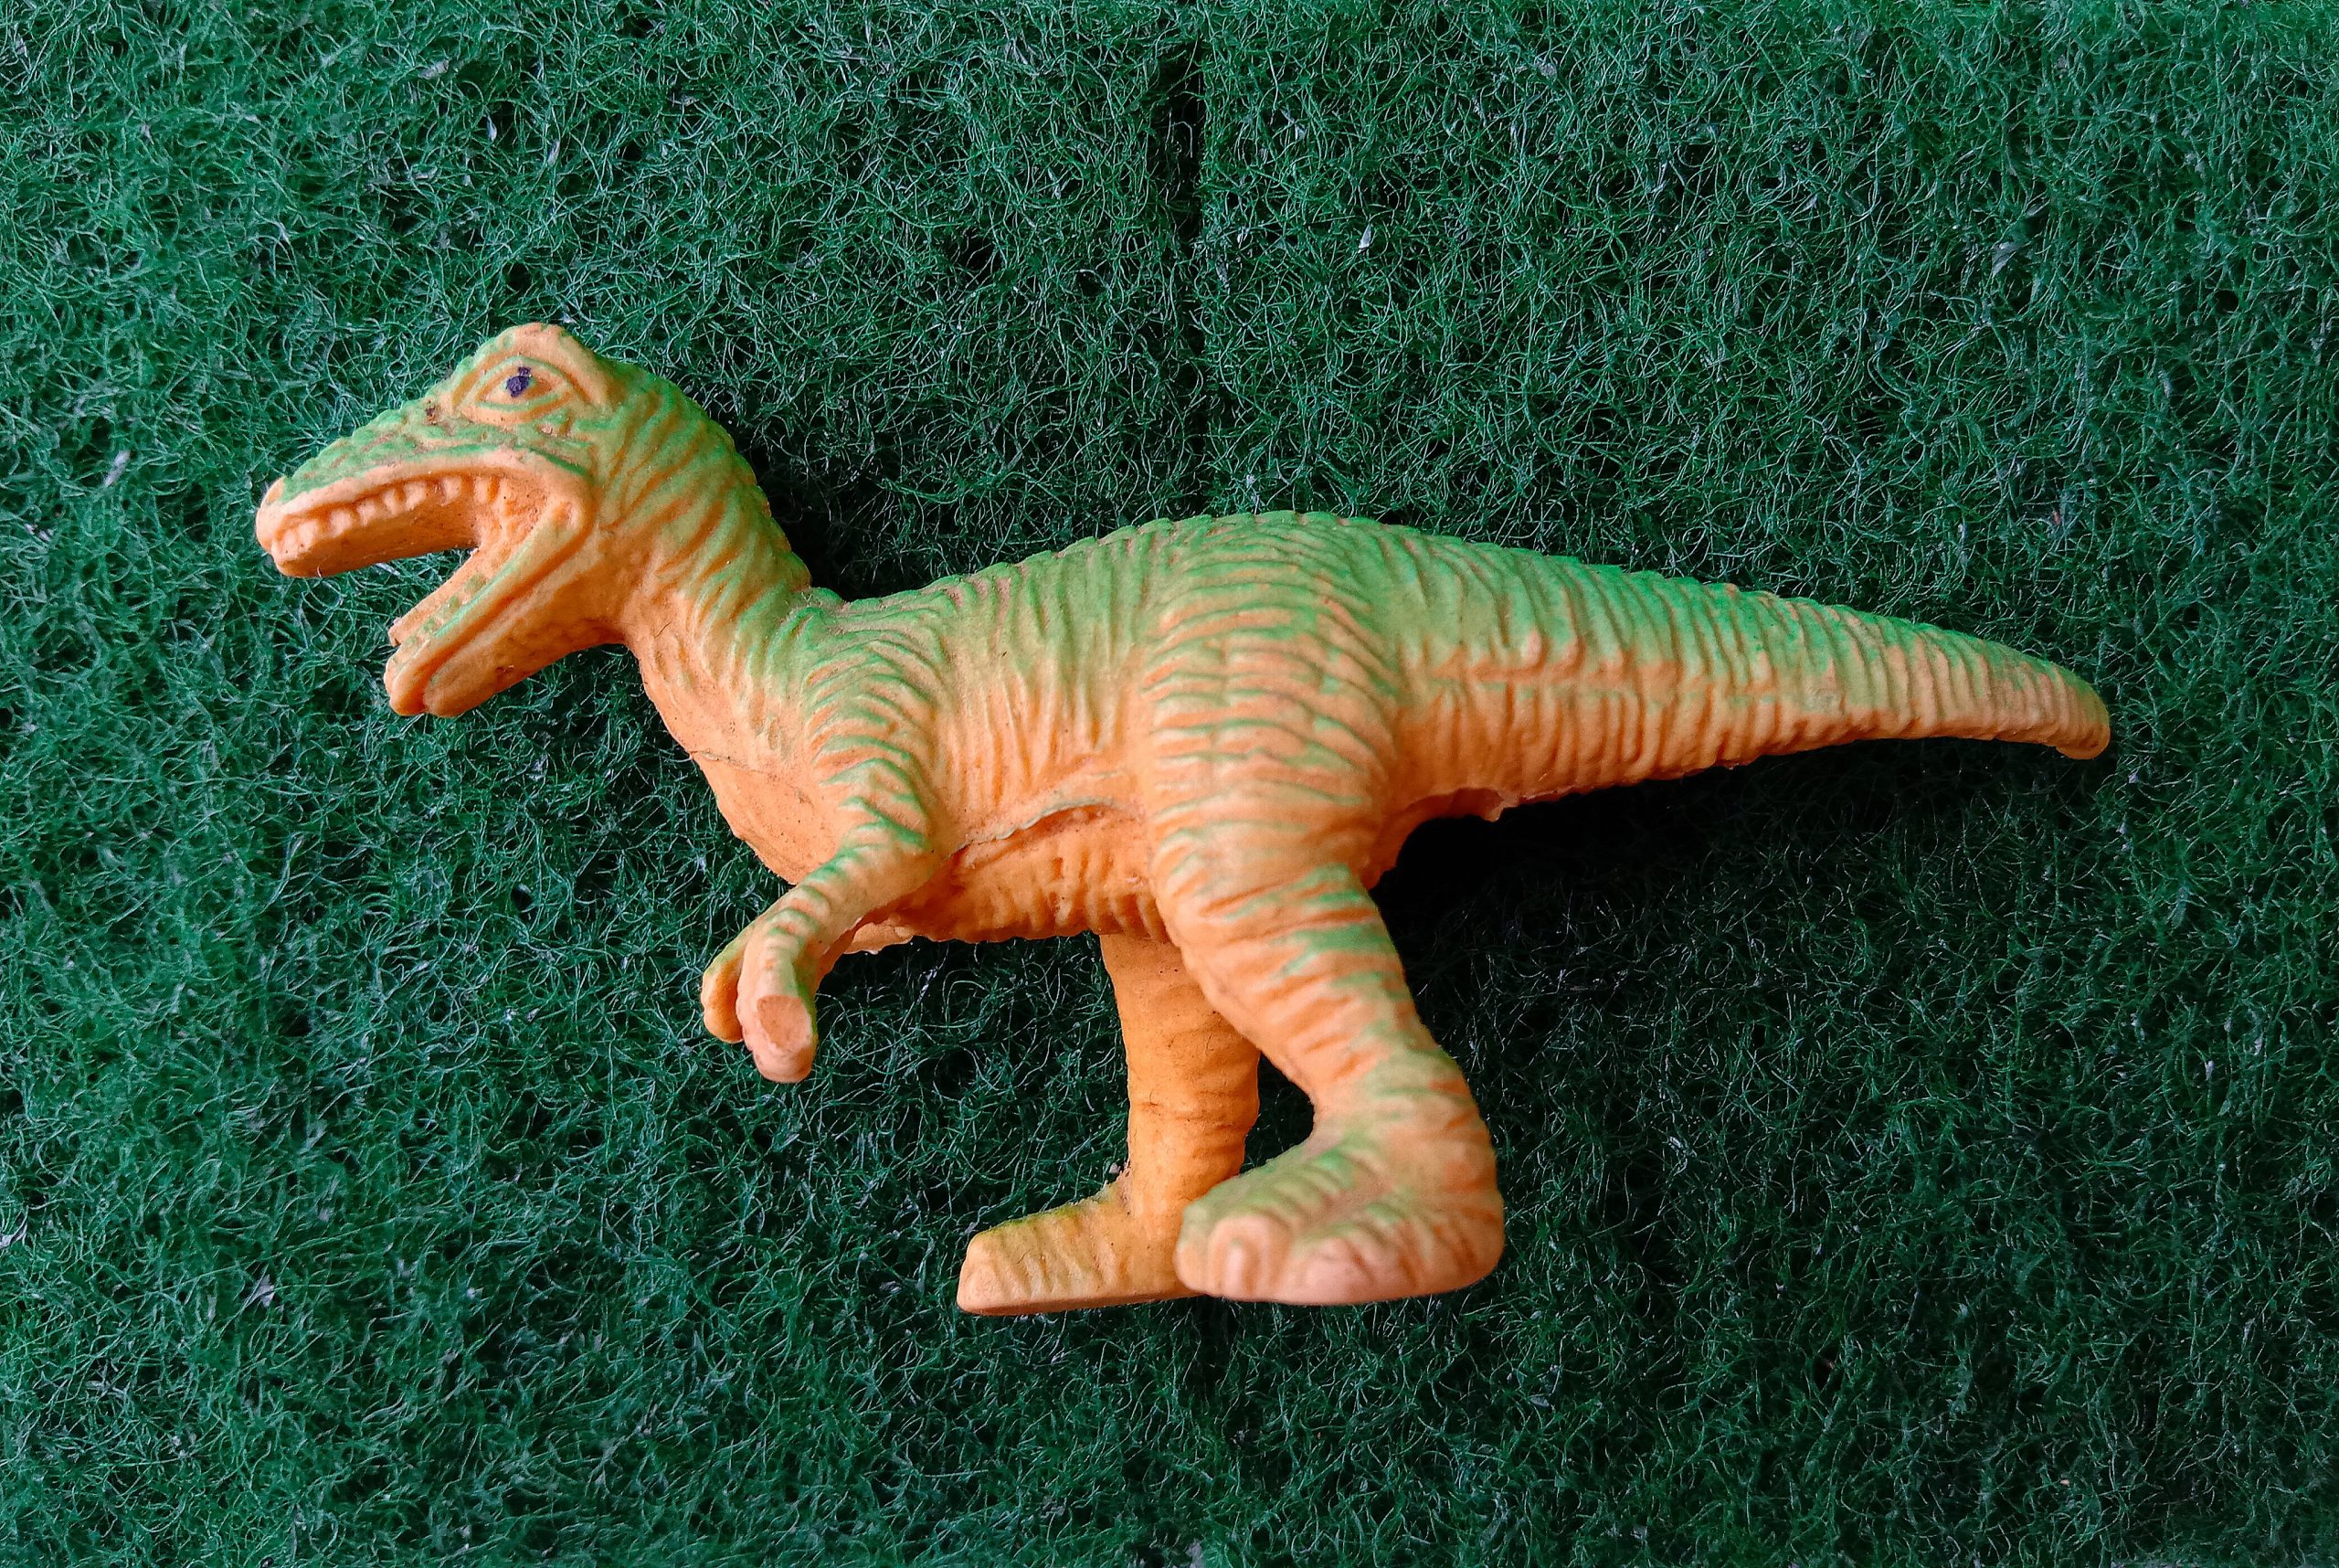 Toy Dinosaur lying on a carpet.